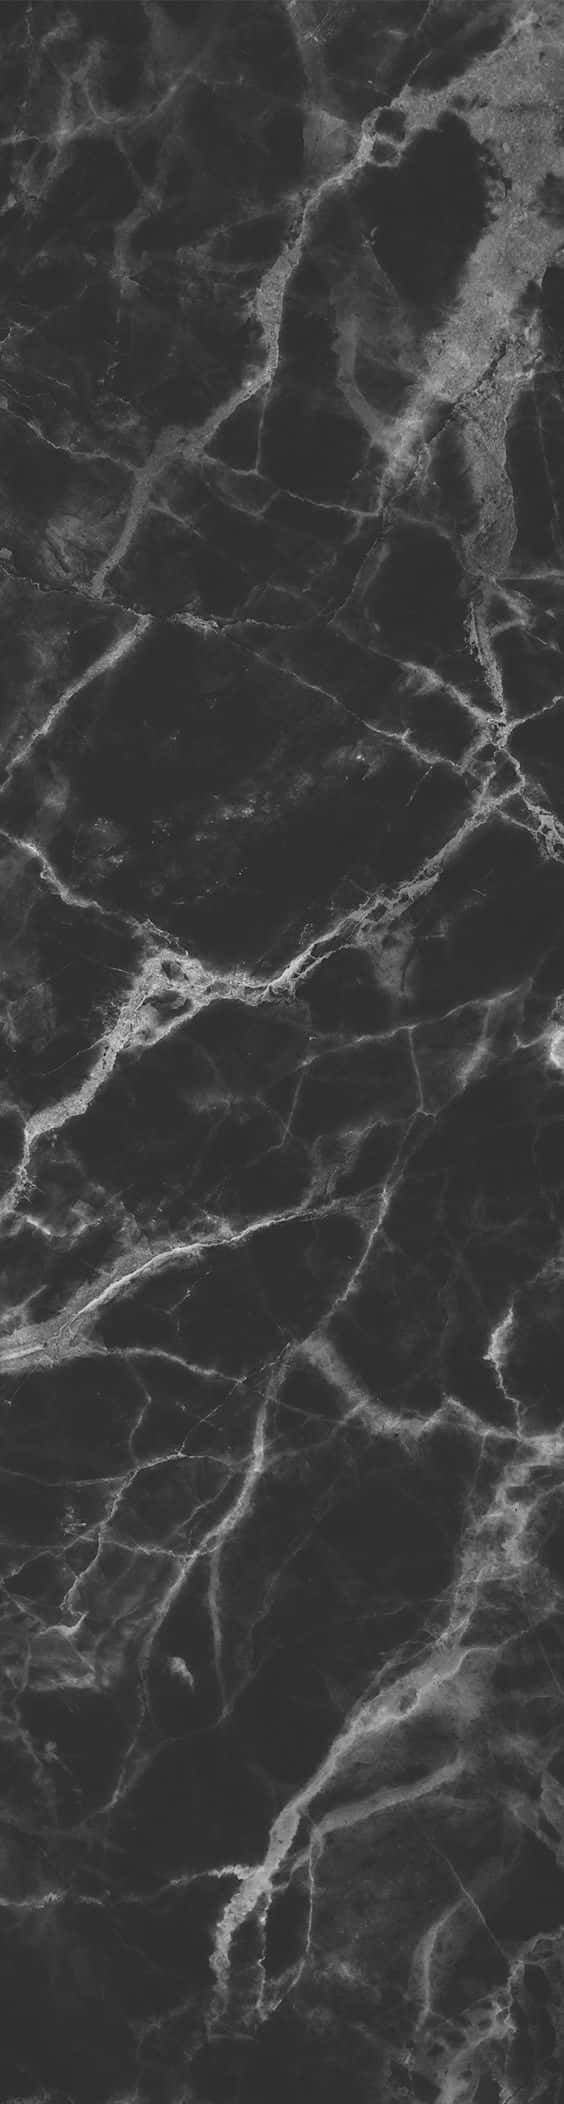 Marble Texture Black Granite Digital Art Picture